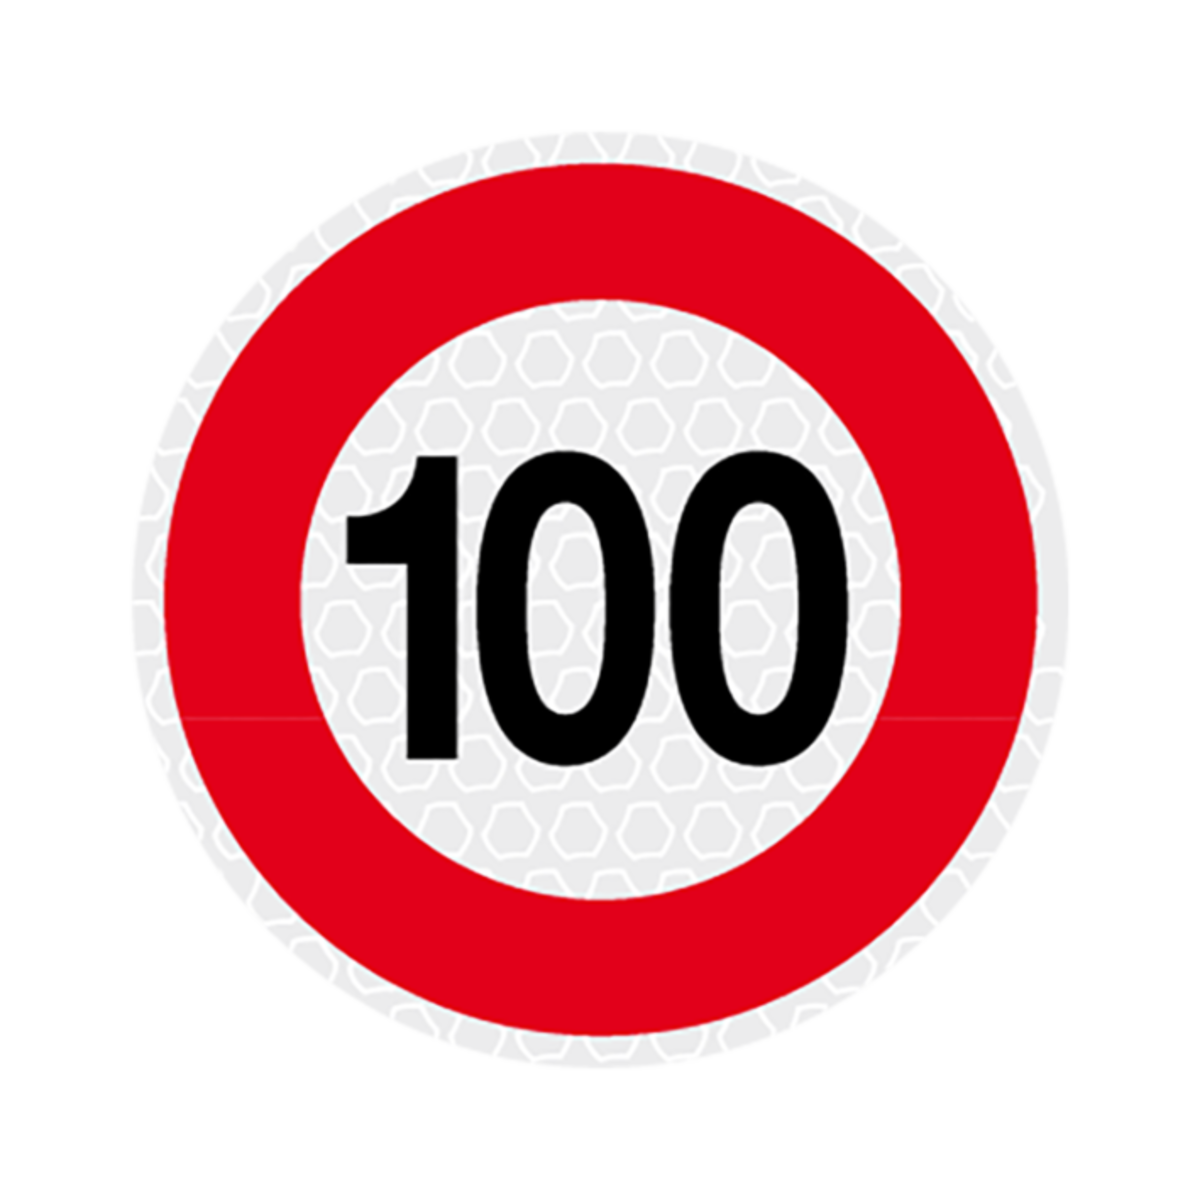 100 KM/H SIGNALLING PANEL